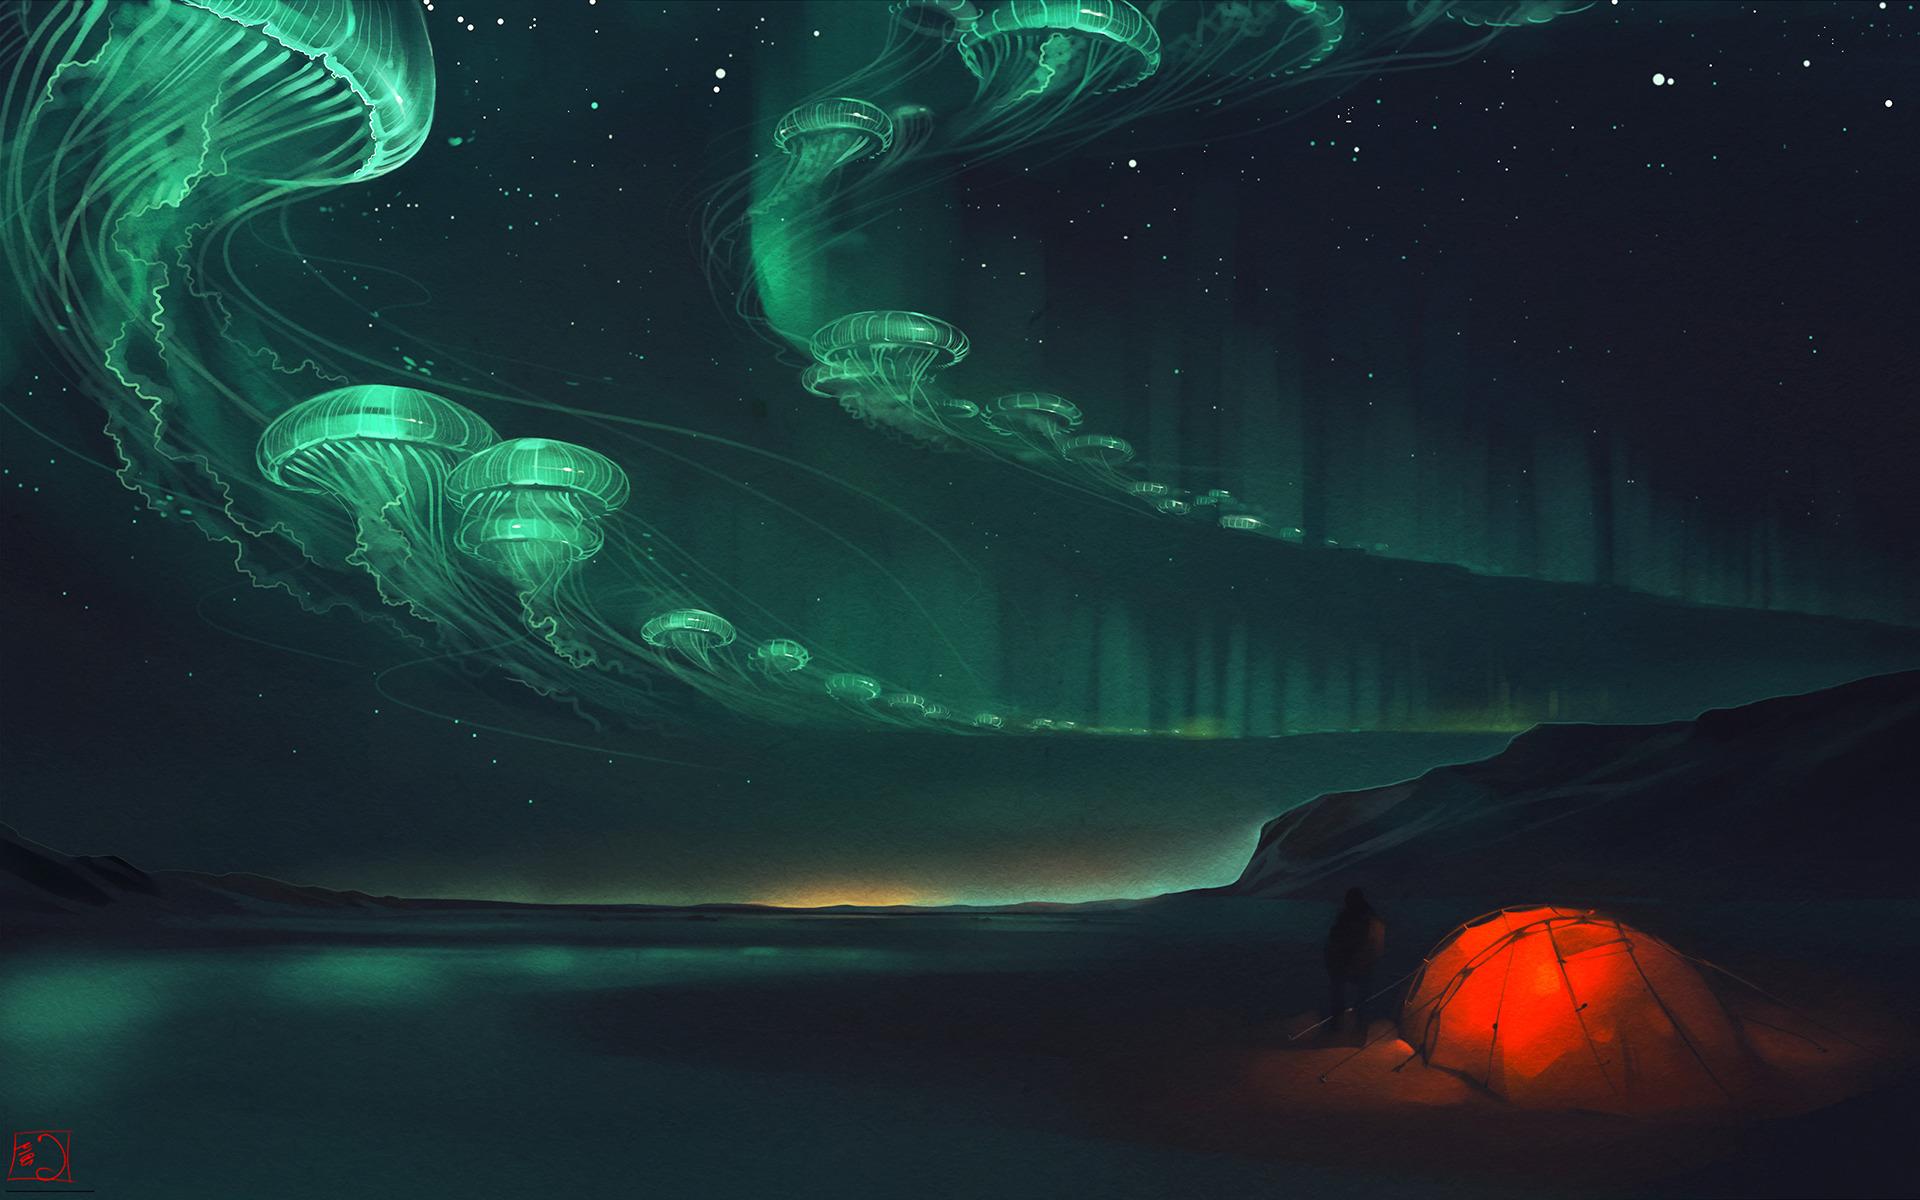 artwork fantasy art surreal tents jellyfish glowing aurorae